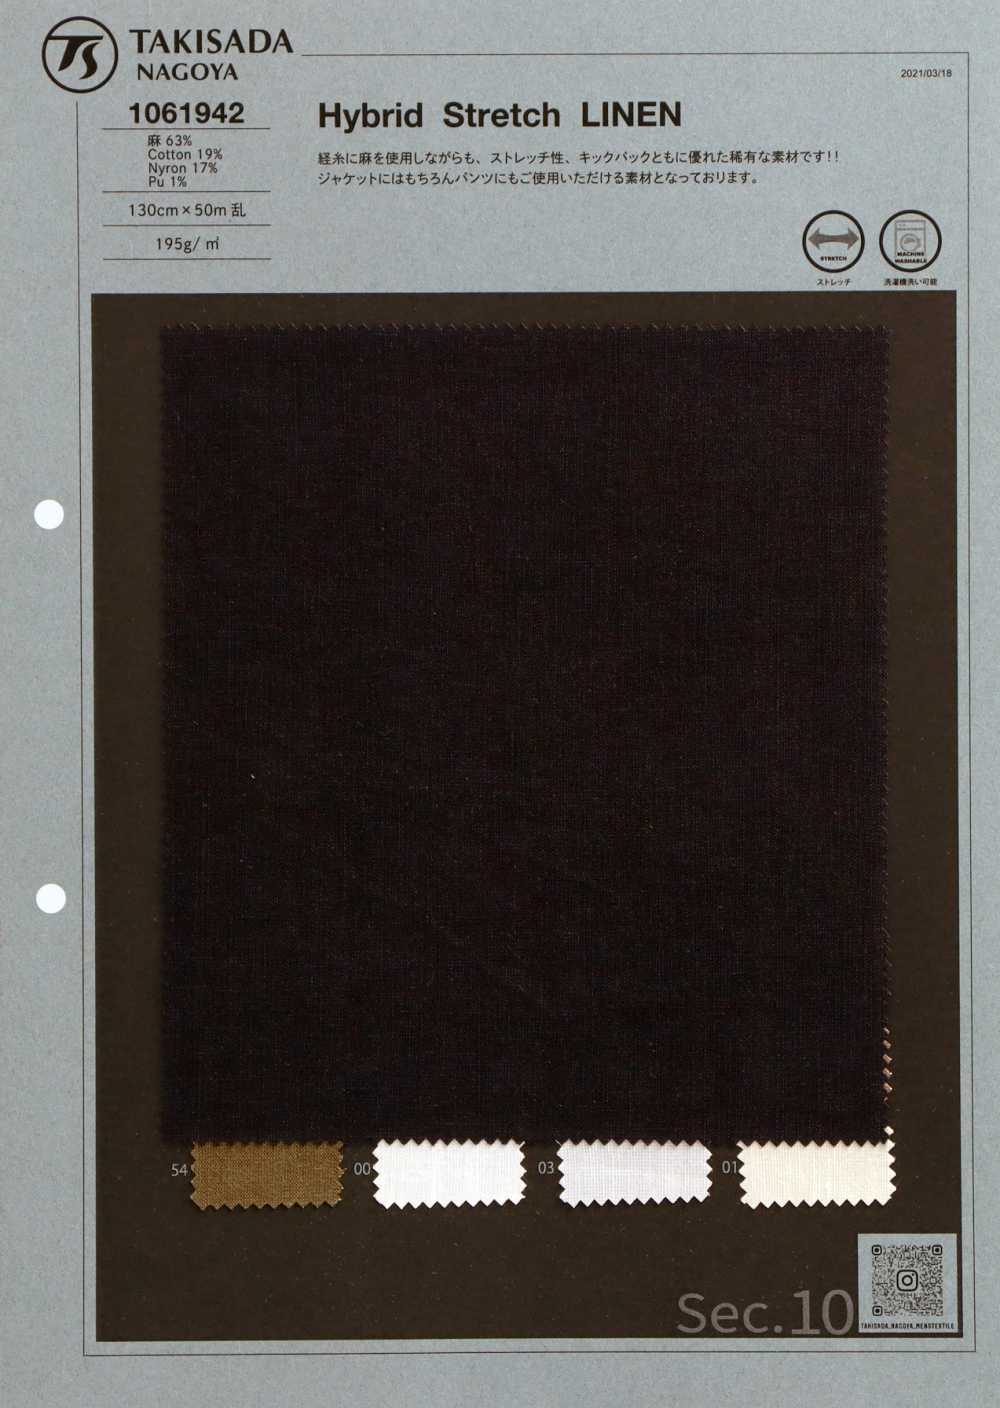 1061942 Hybrid Stretch Linen[Textile / Fabric] Takisada Nagoya